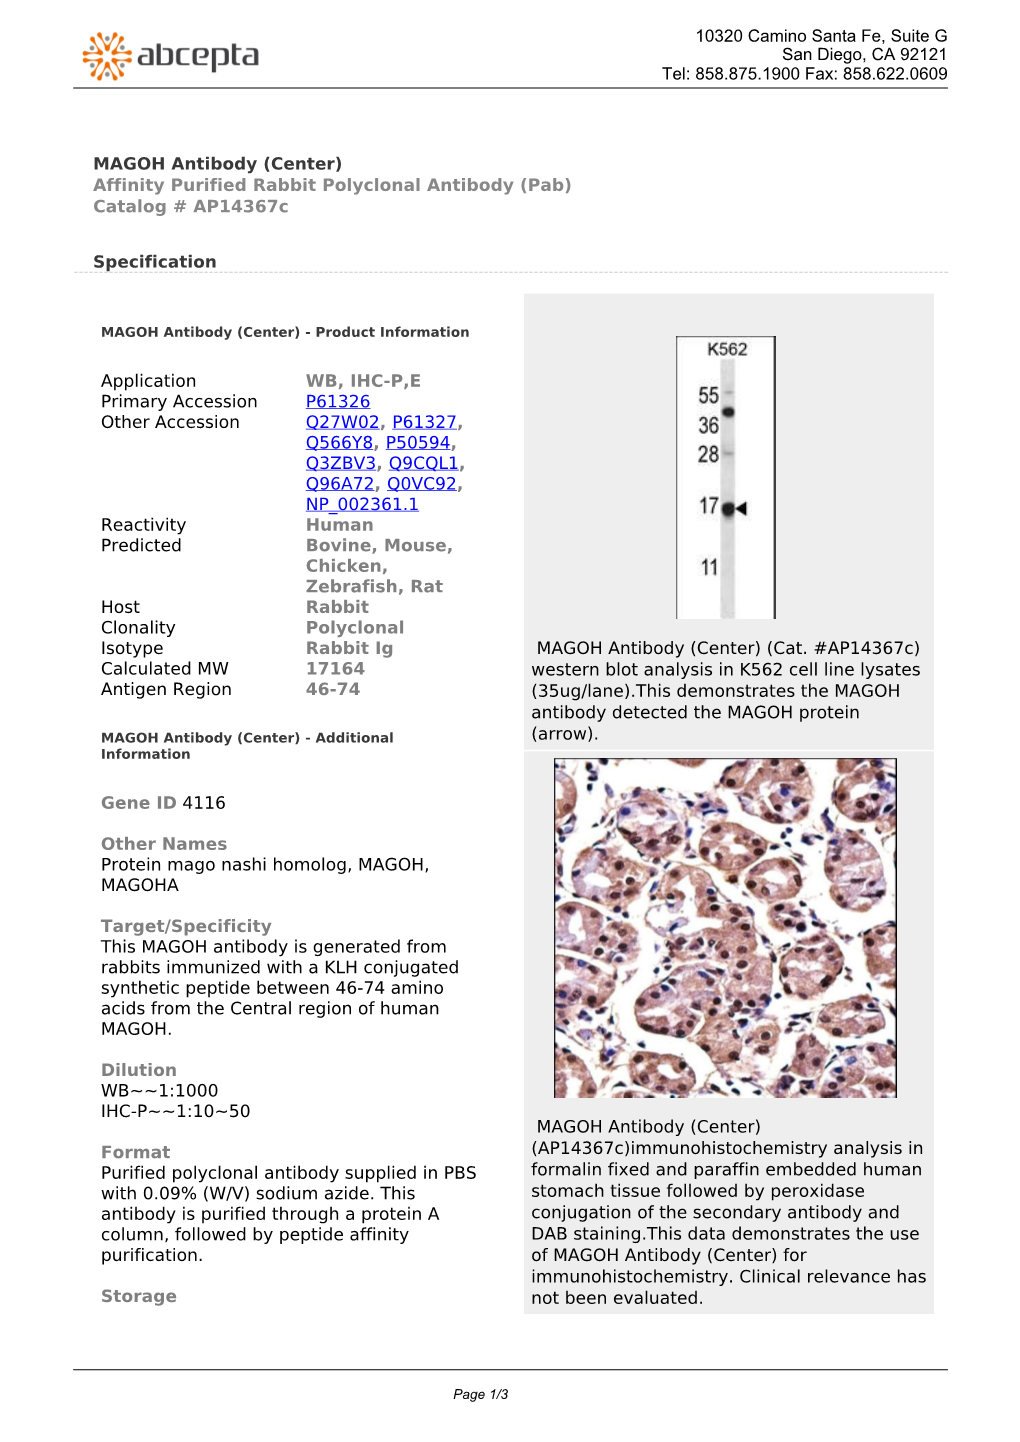 MAGOH Antibody (Center) Affinity Purified Rabbit Polyclonal Antibody (Pab) Catalog # Ap14367c